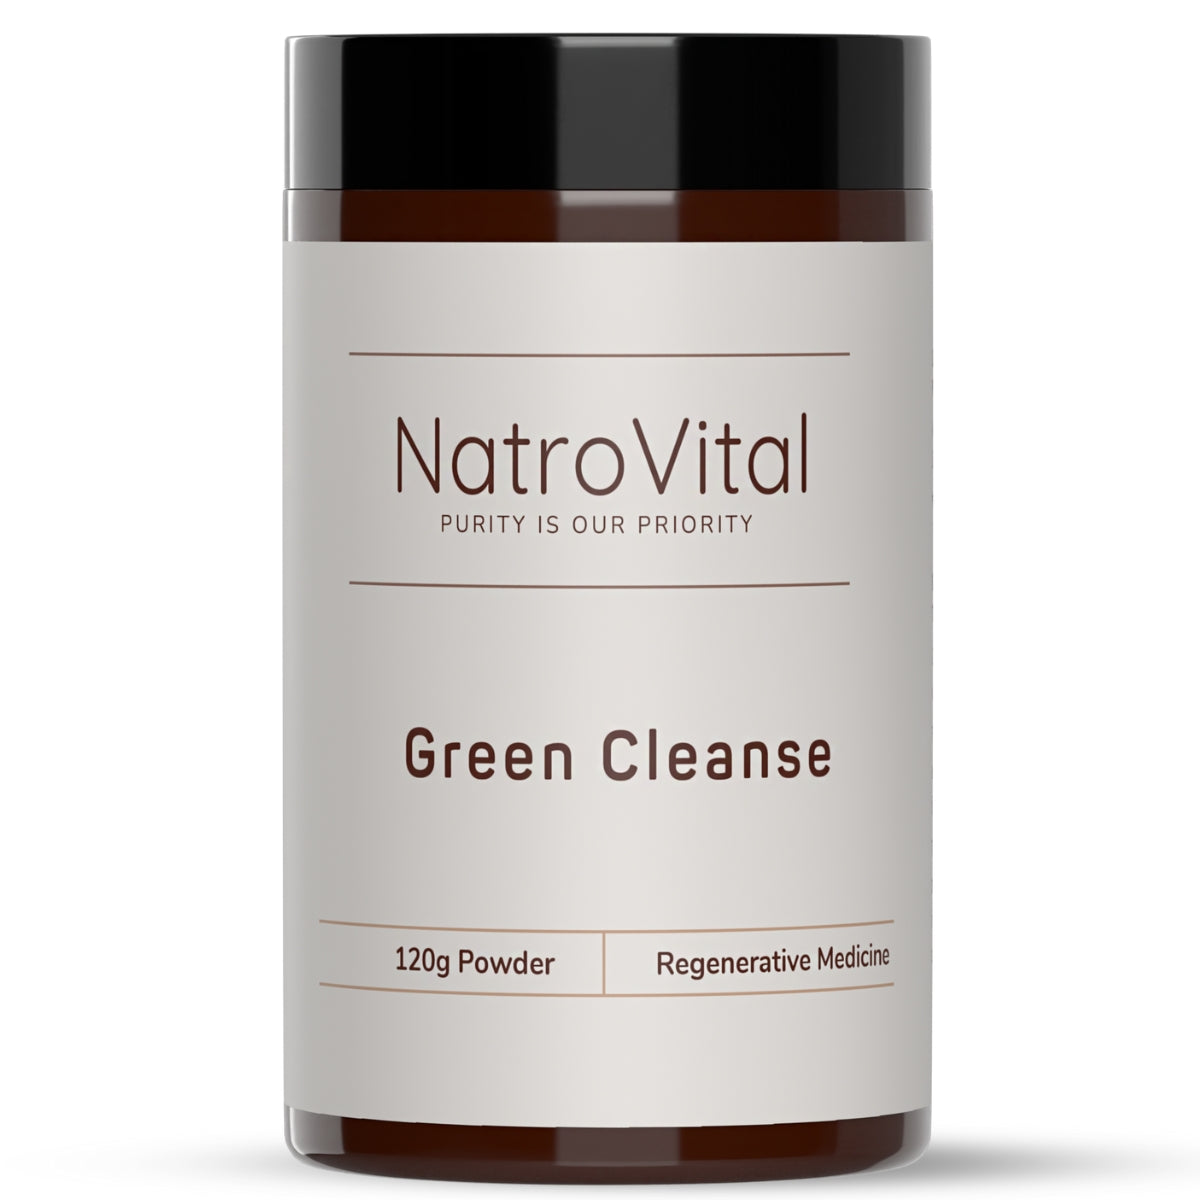 NatroVital Green Cleanse